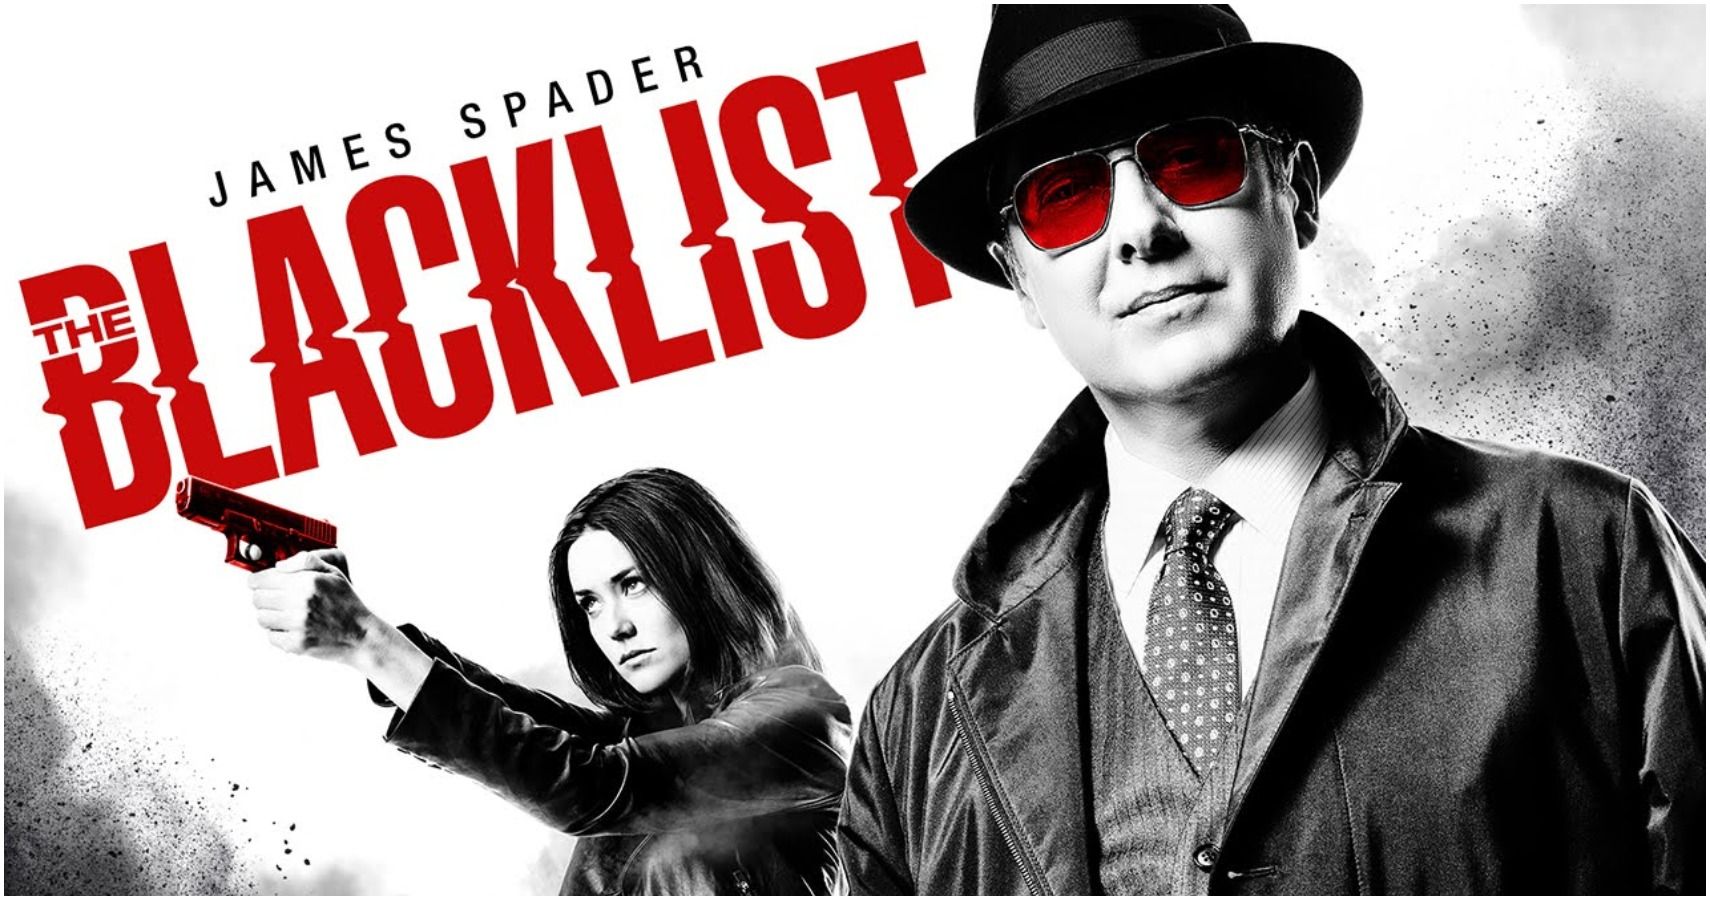 the blacklist season 3 complete kickass